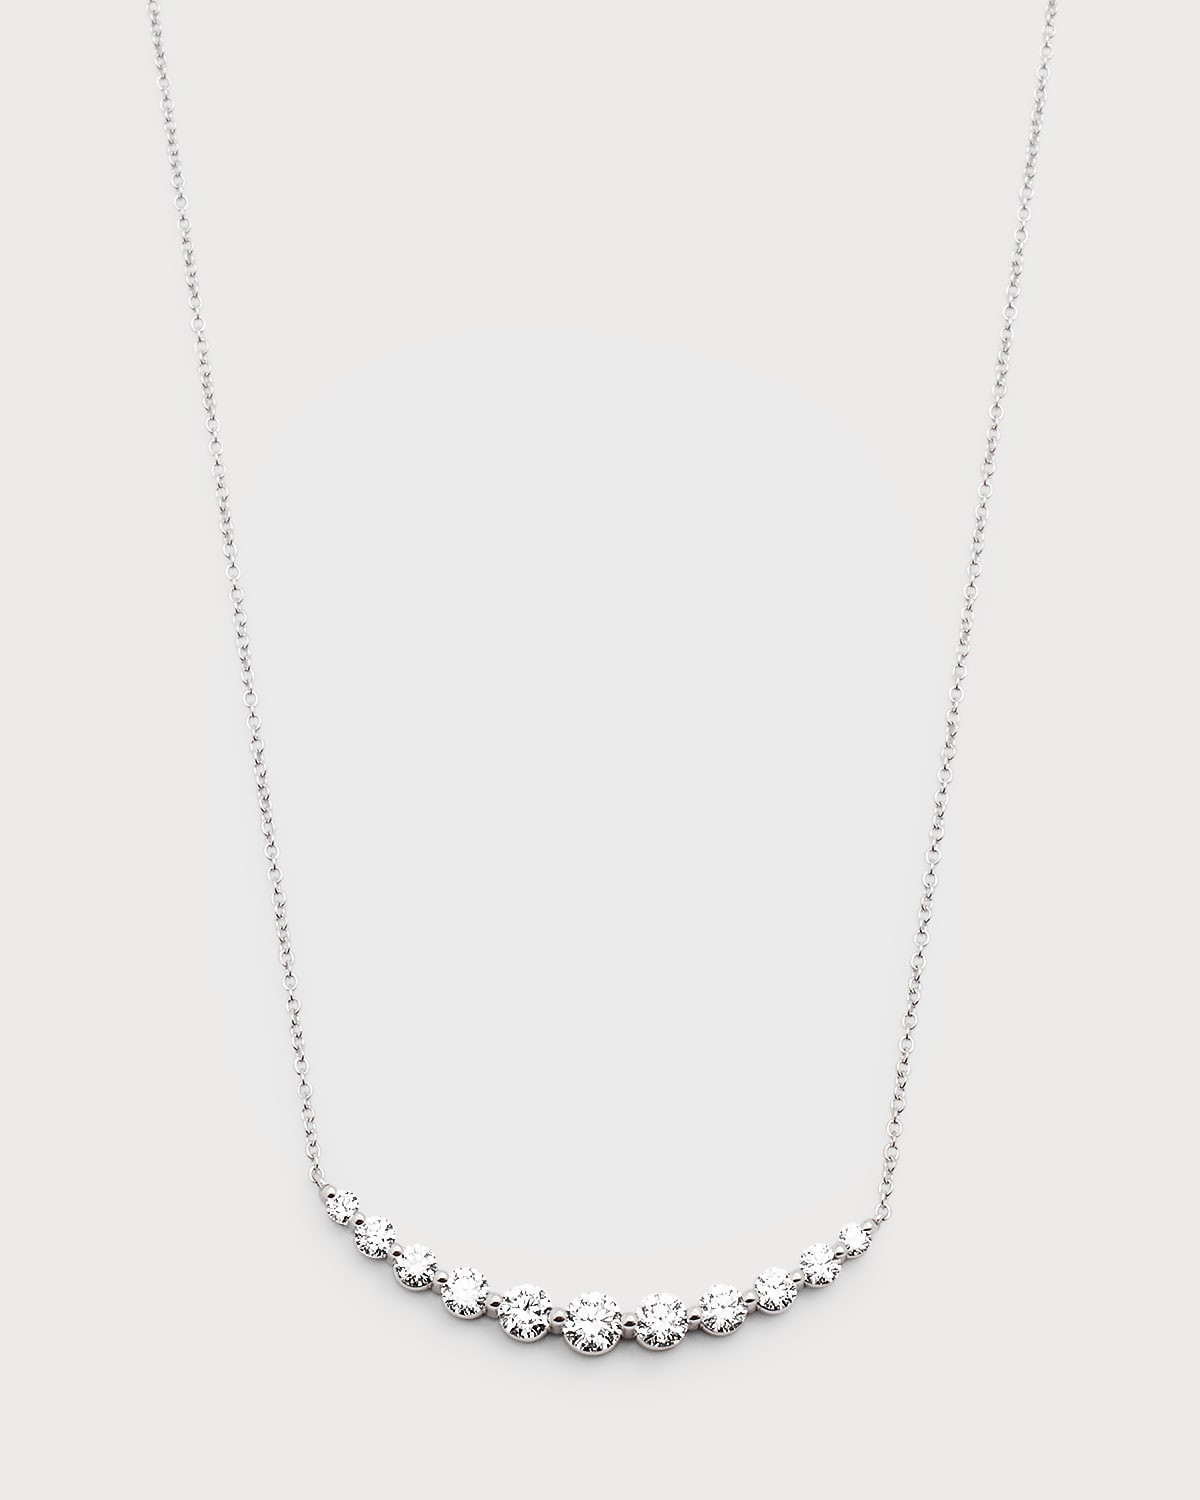 Neiman Marcus Diamonds 18k White Gold 11 Small Single-prong Diamond Necklace